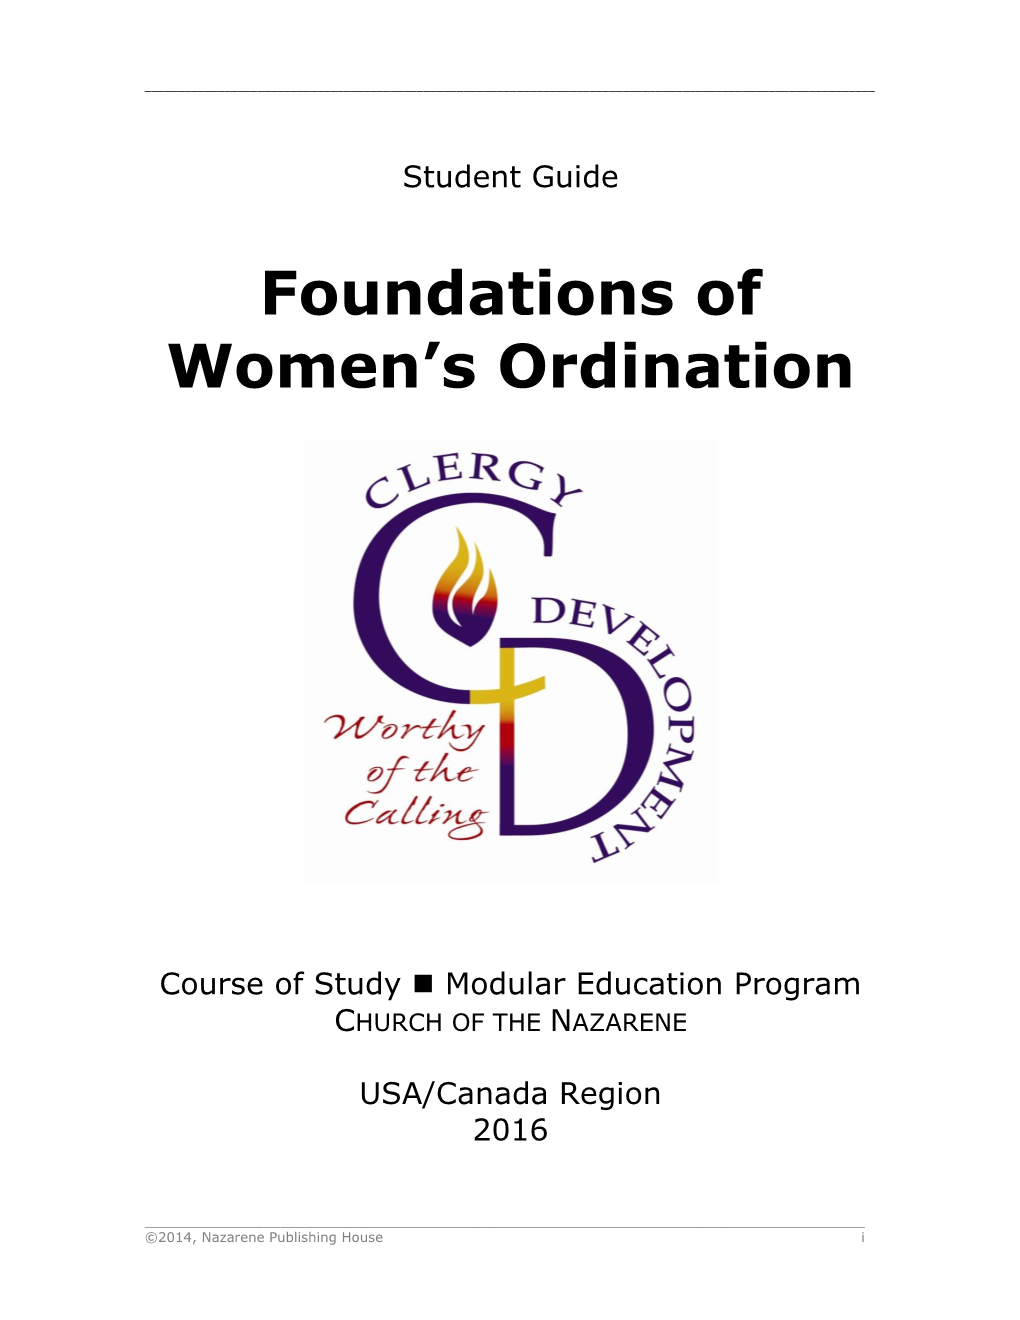 Foundations of Women's Ordination